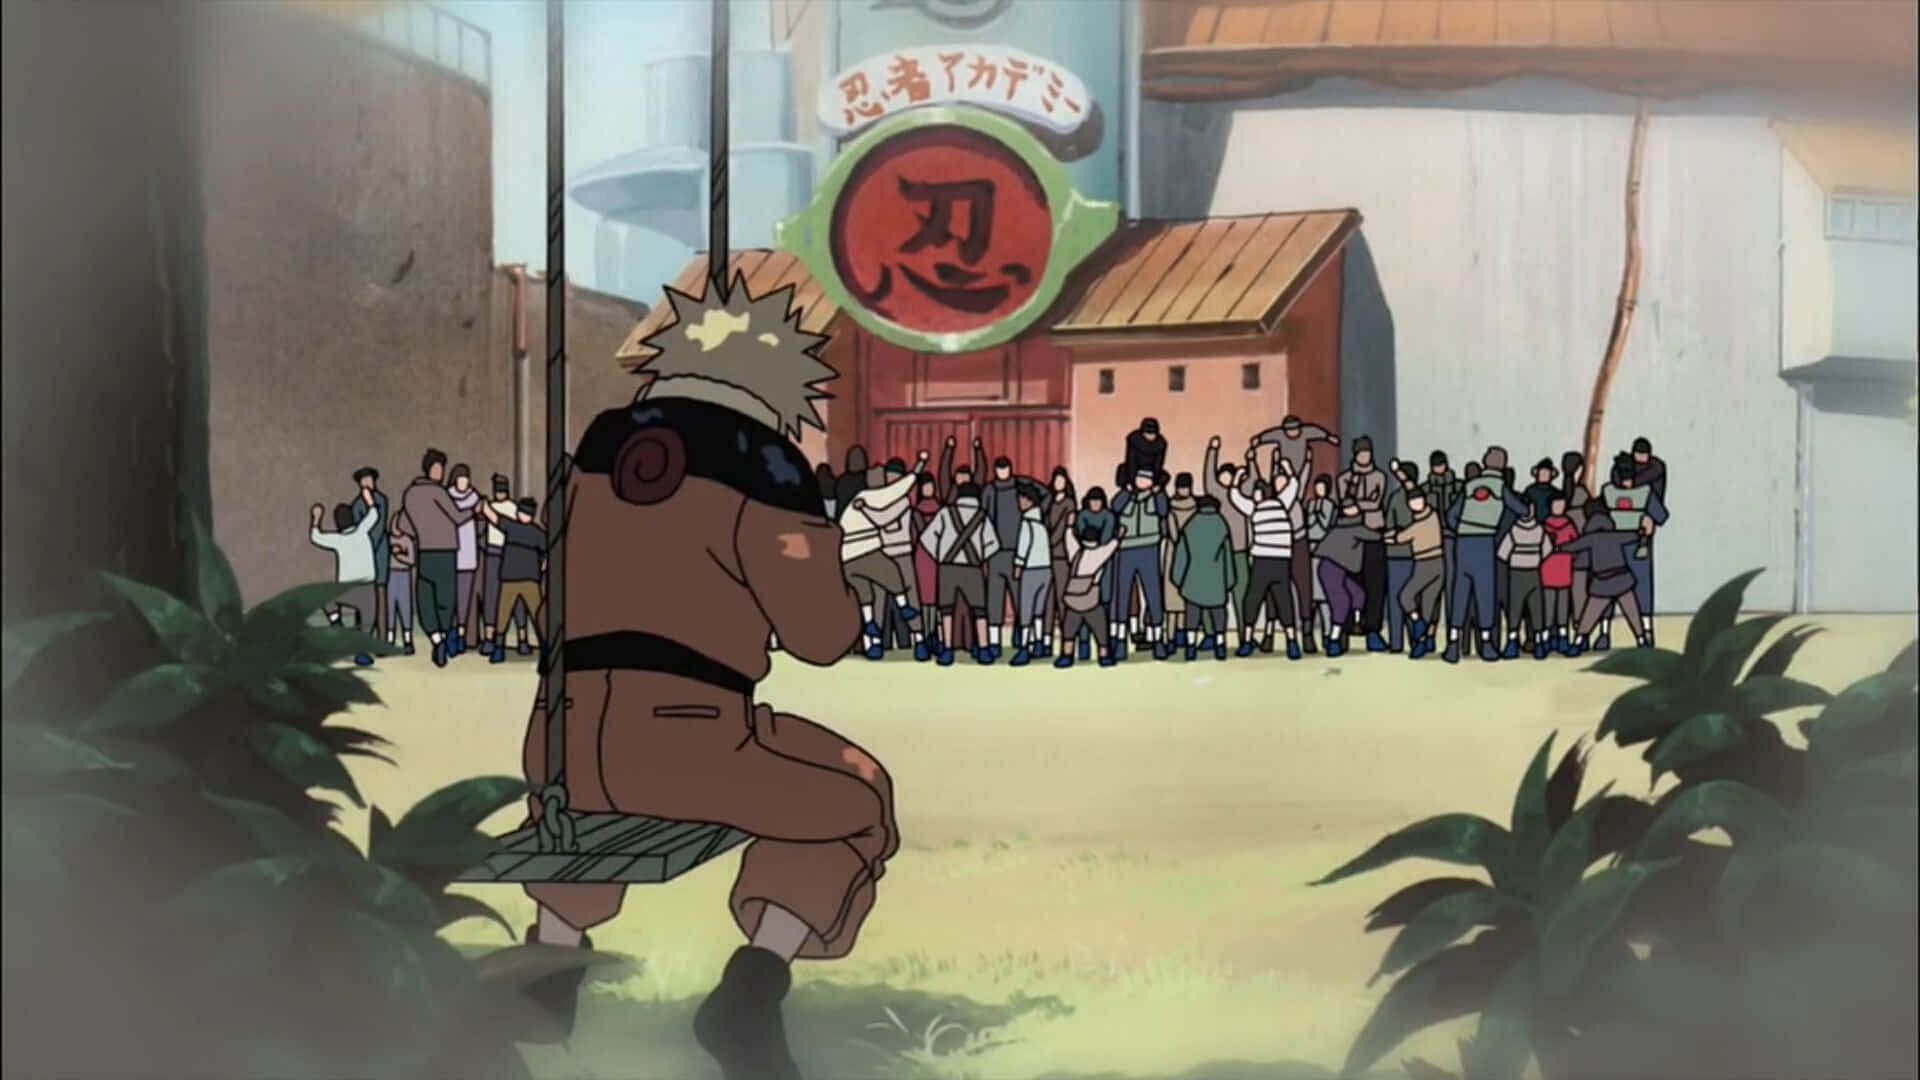 Naruto sitting alone at the Ninja Academy (Image via Studio Pierrot)